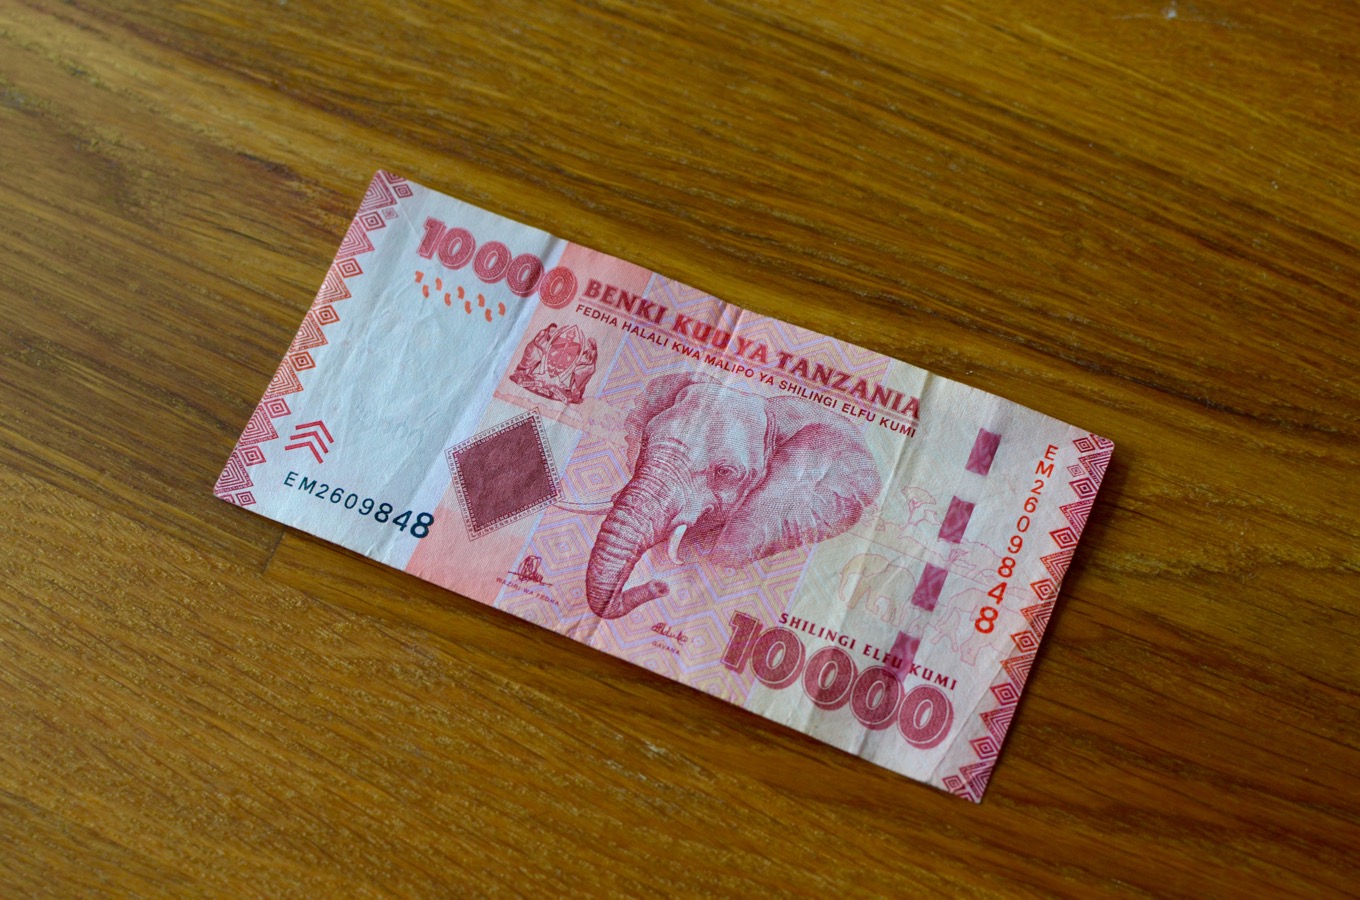 Tanzania Shilling bill